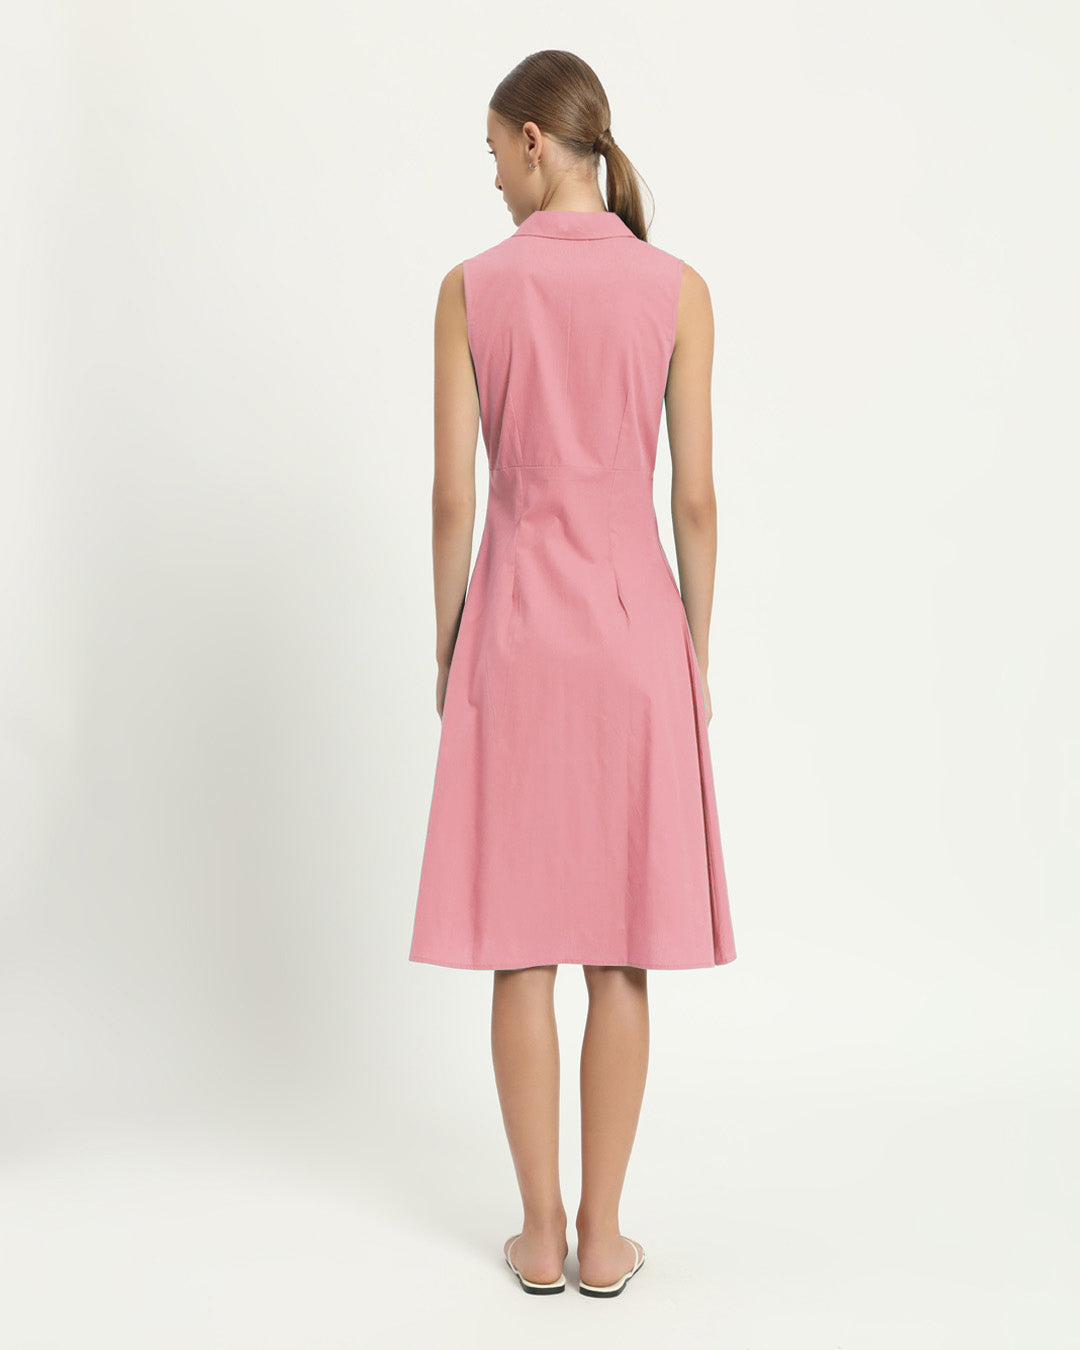 The Germering Fondant Pink Cotton Dress